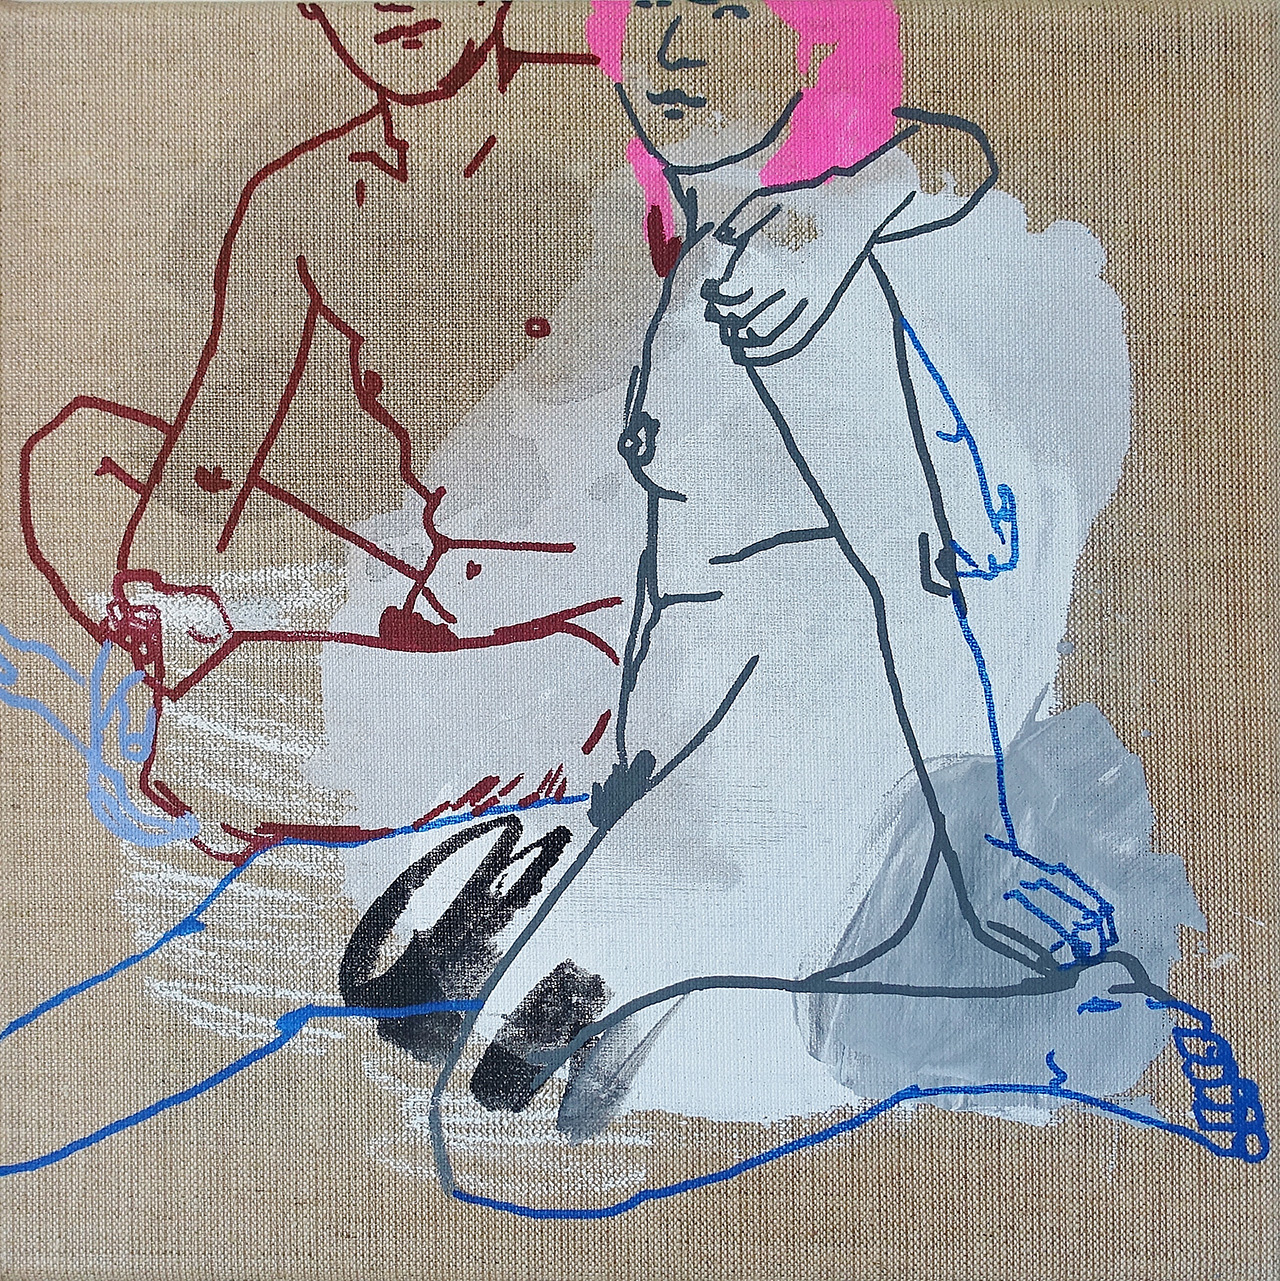 Agnieszka Sandomierz - Together (Tempera on canvas | Size: 36 x 36 cm | Price: 2800 PLN)